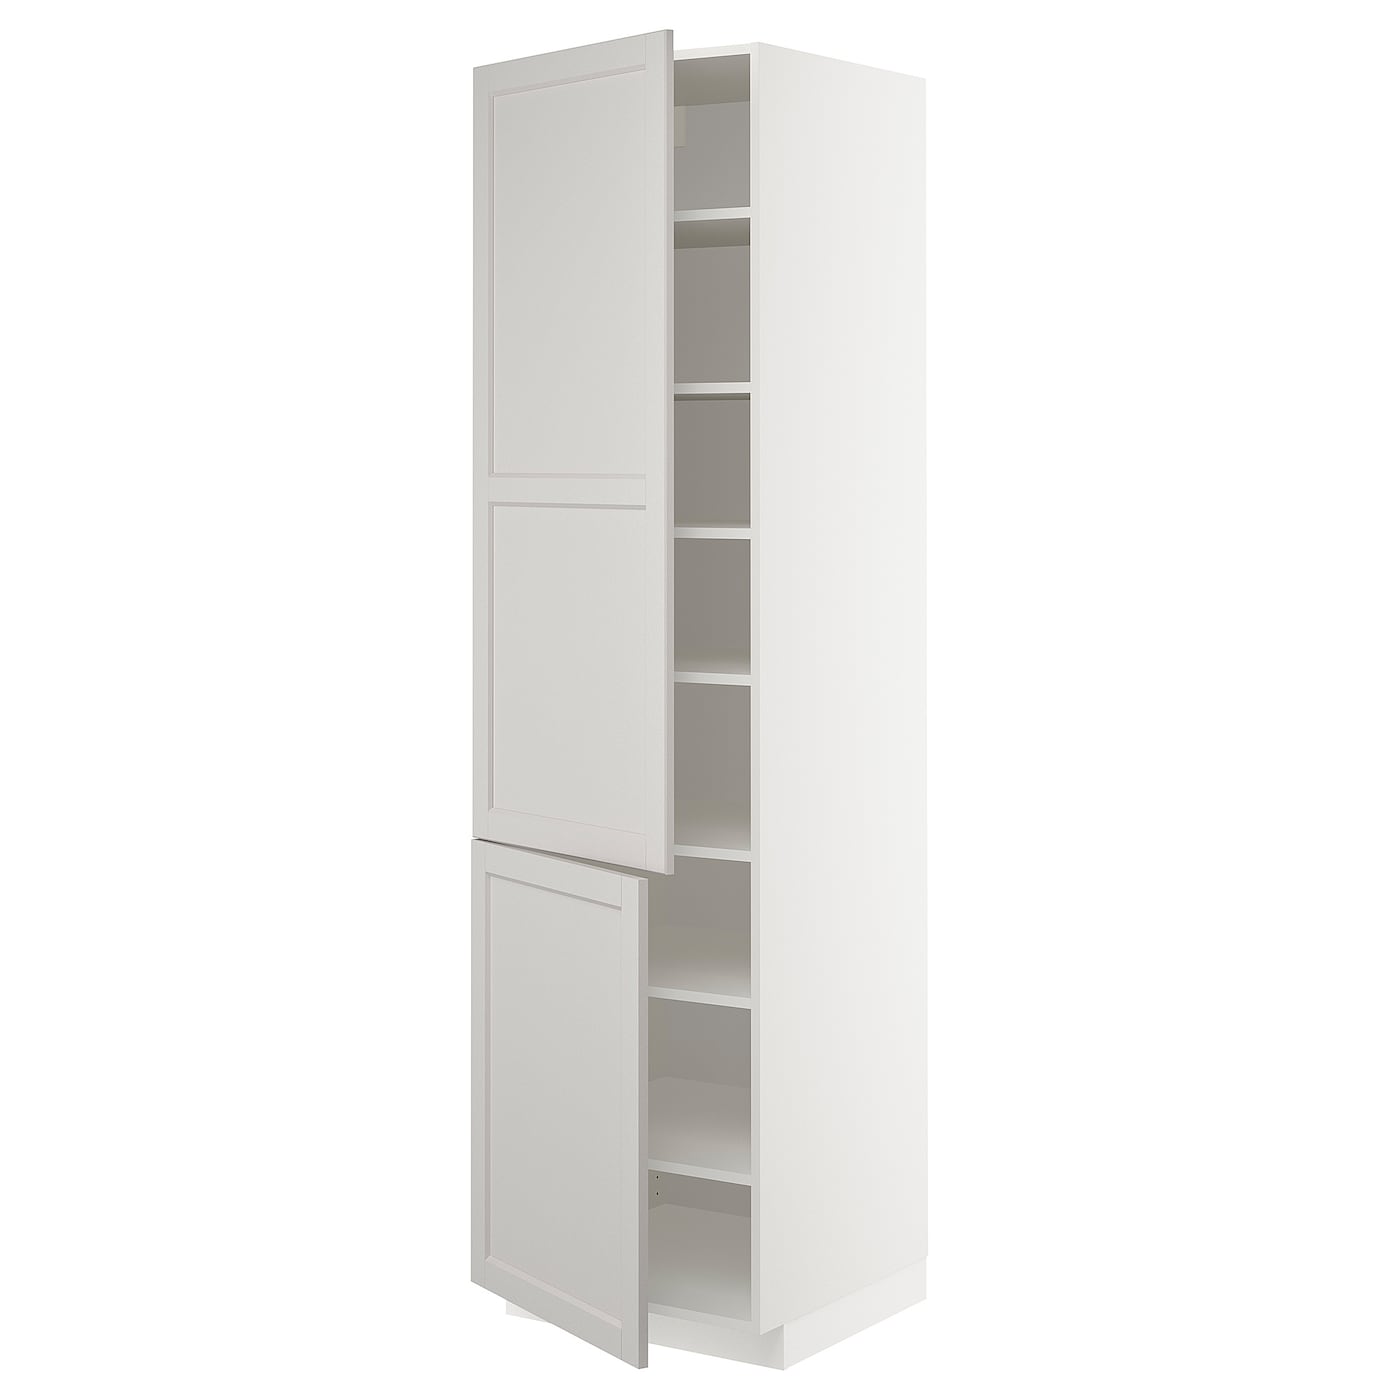 Высокий шкаф - IKEA METOD/МЕТОД ИКЕА, 220х60х60 см, белый/серый